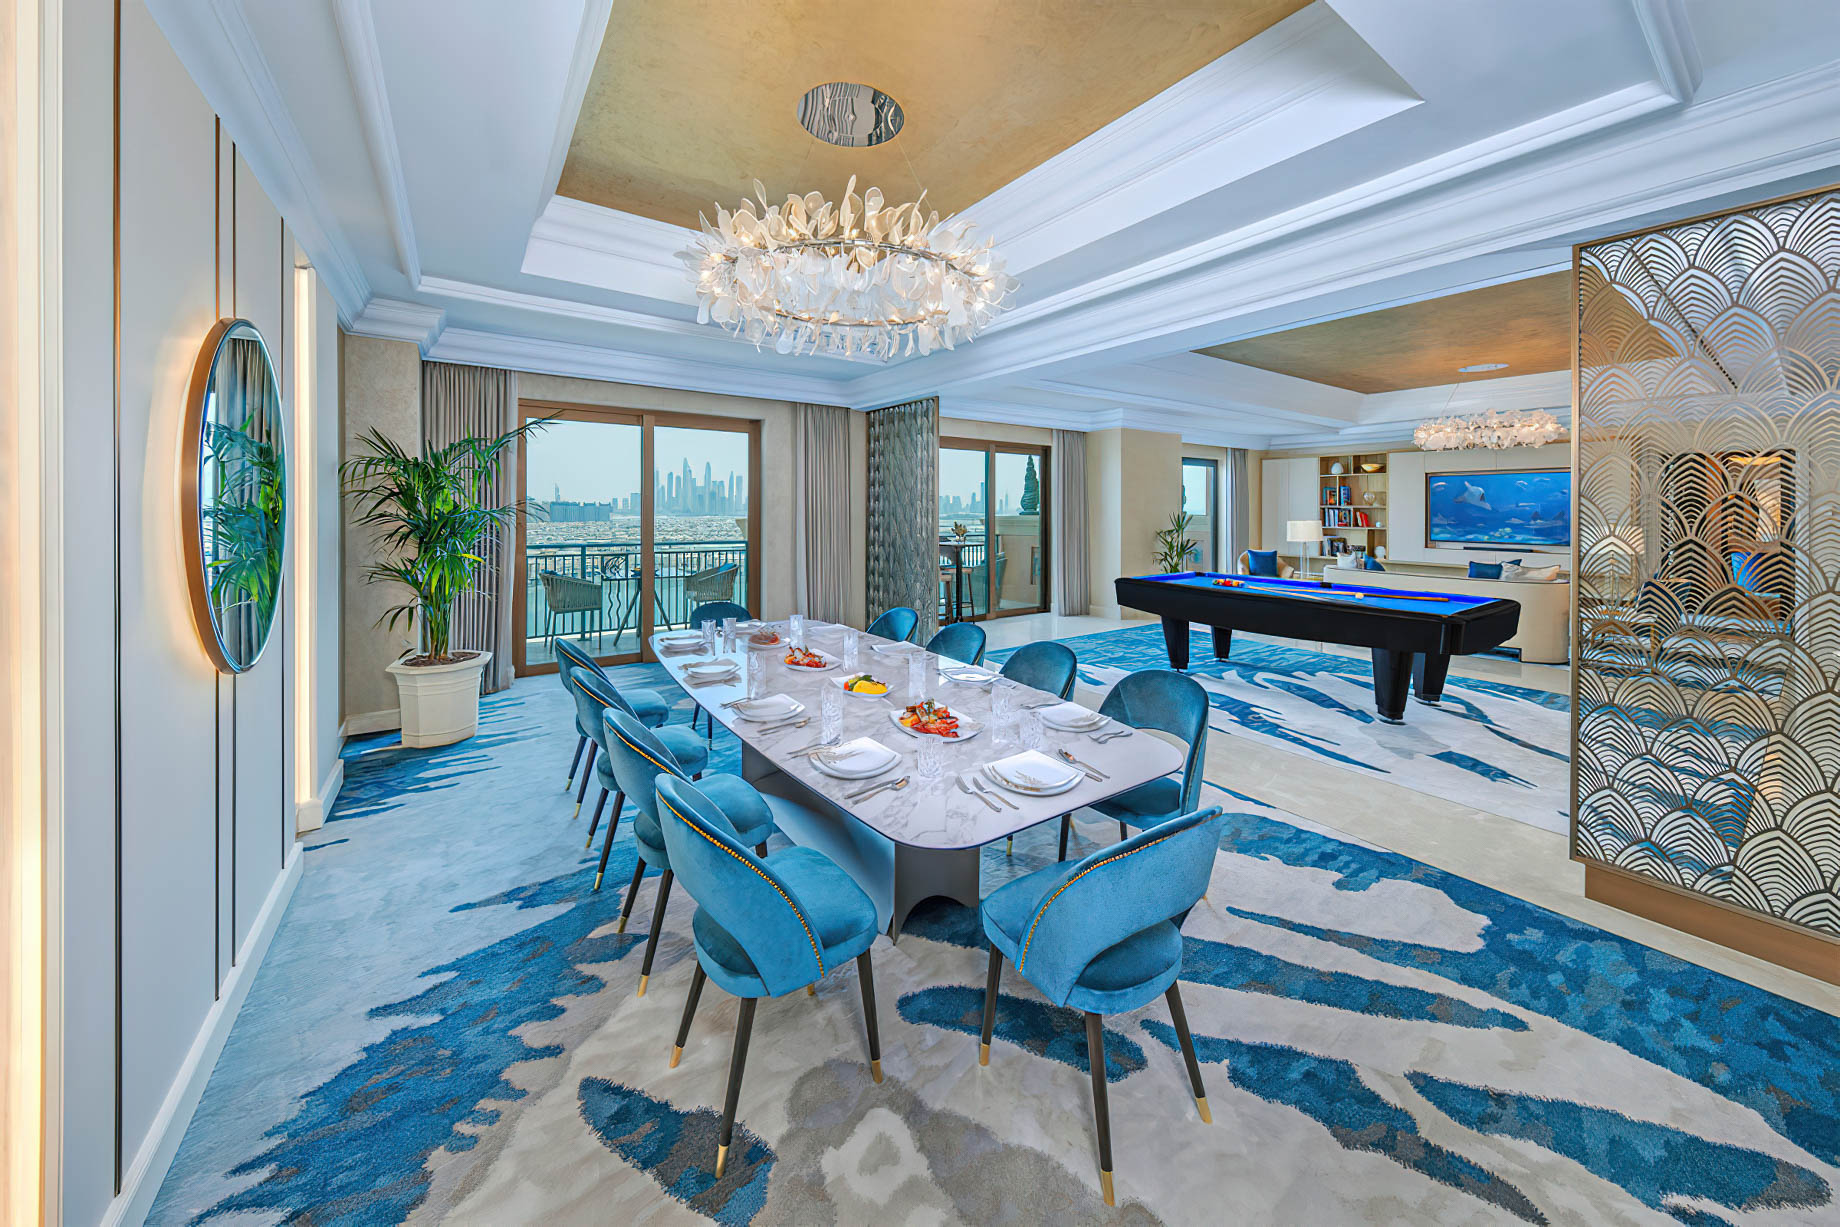 Atlantis The Palm Resort – Crescent Rd, Dubai, UAE – Presidential Suite Dining Lounge Area